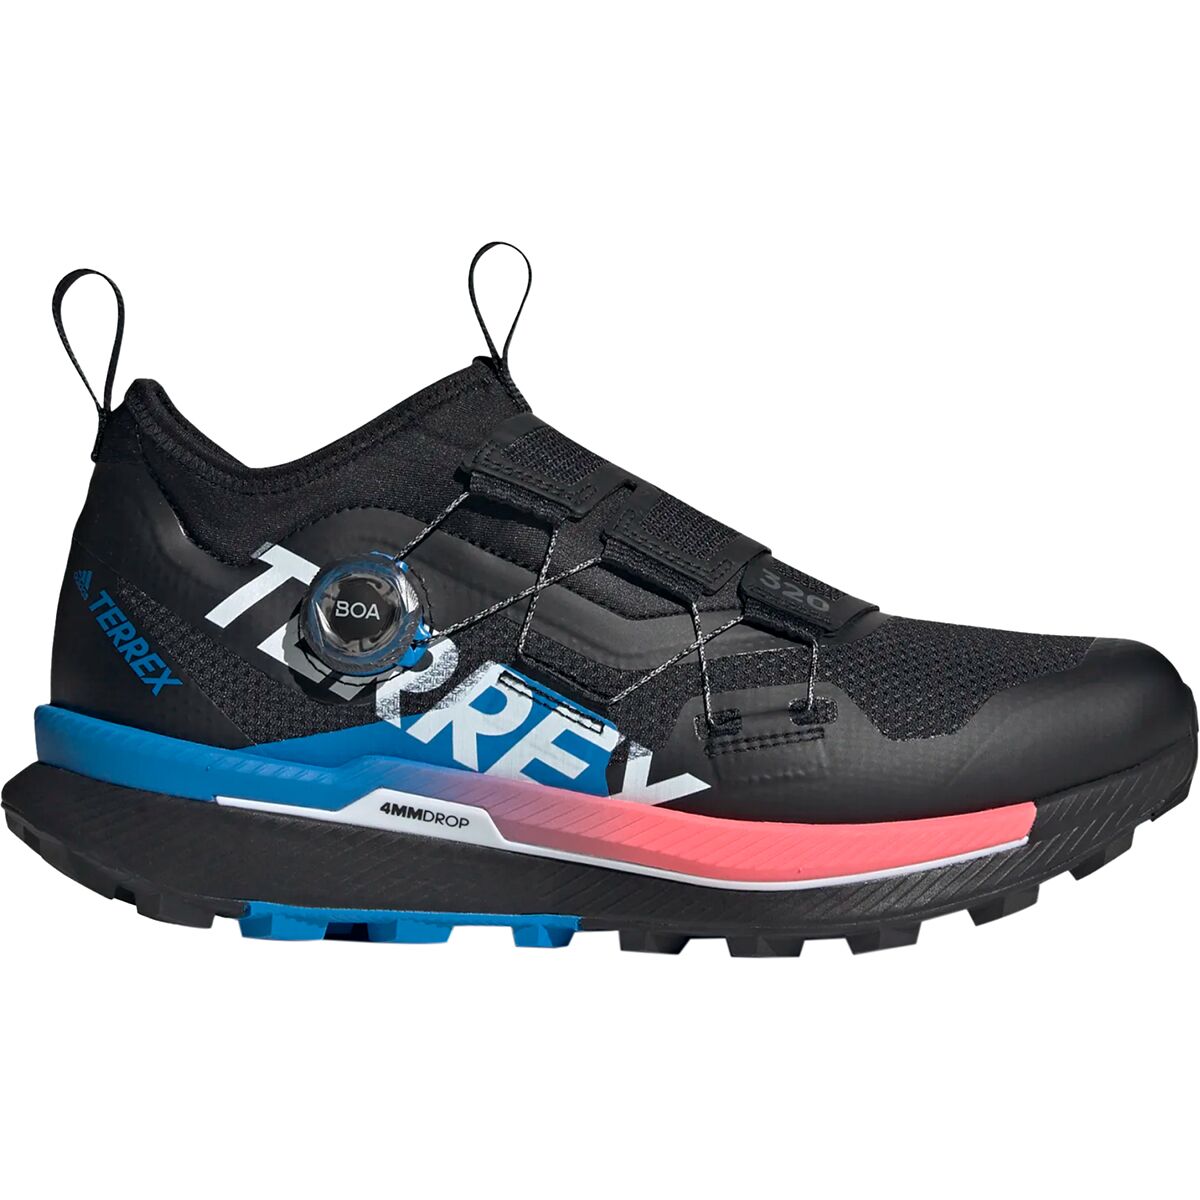 Adidas Outdoor Terrex Agravic Pro Trail Running Shoe - Men's